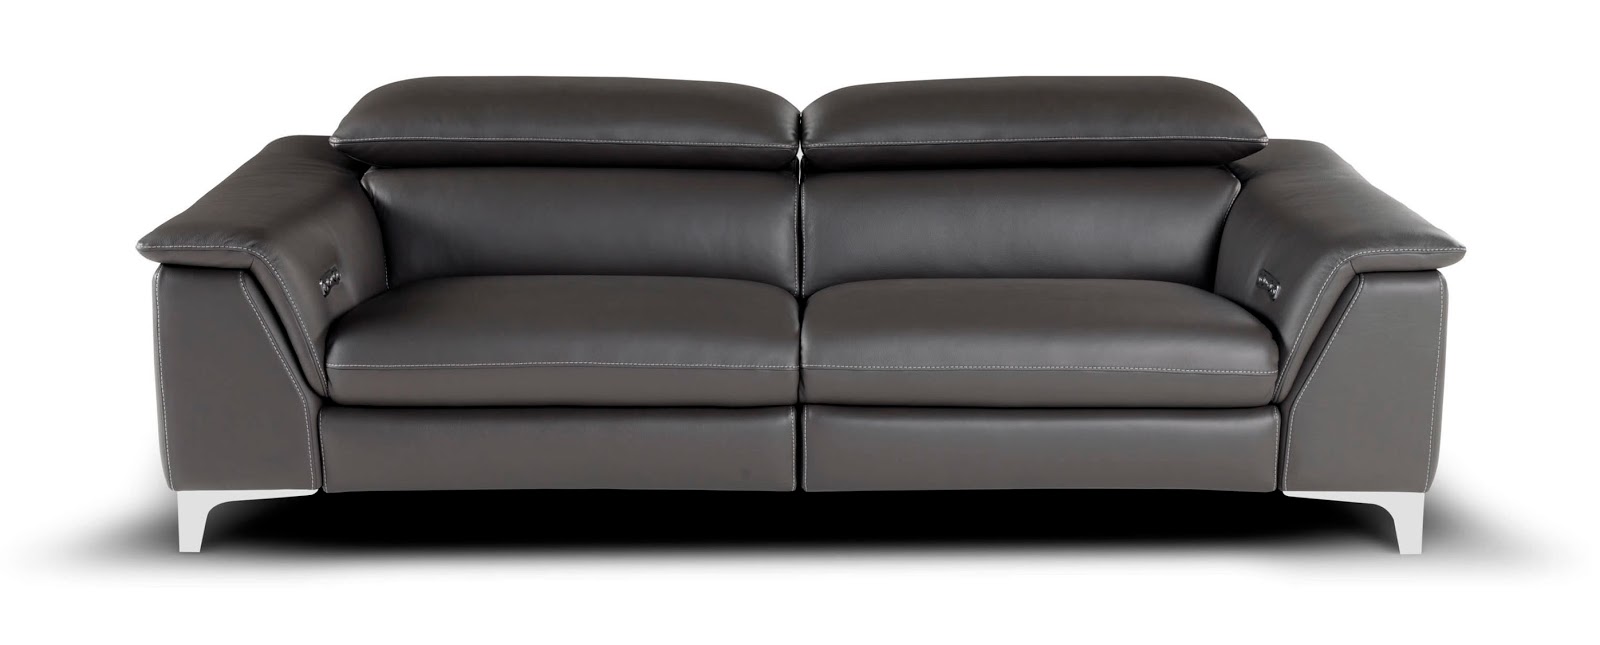 costco top grain leather sofa reviews